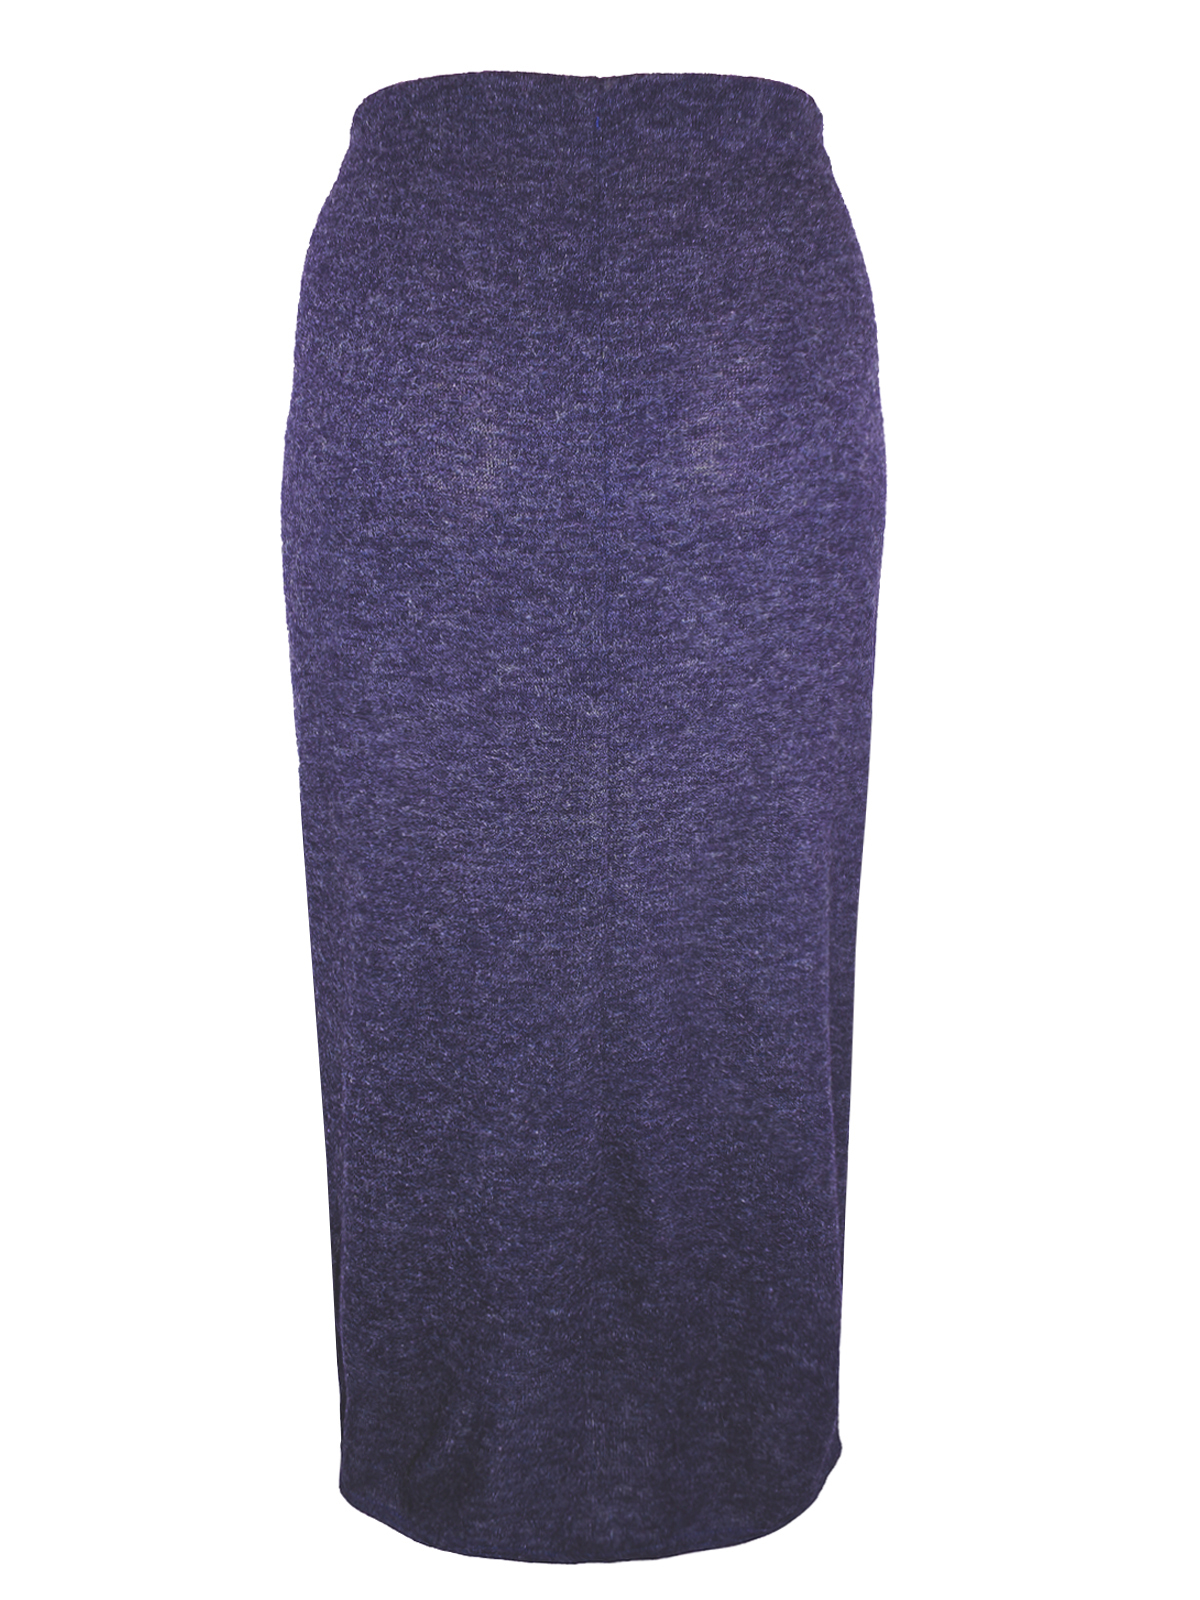 Edit - - Curve PURPLE Marl Long Warm Knit Skirt - Plus Size 18 to 30/32